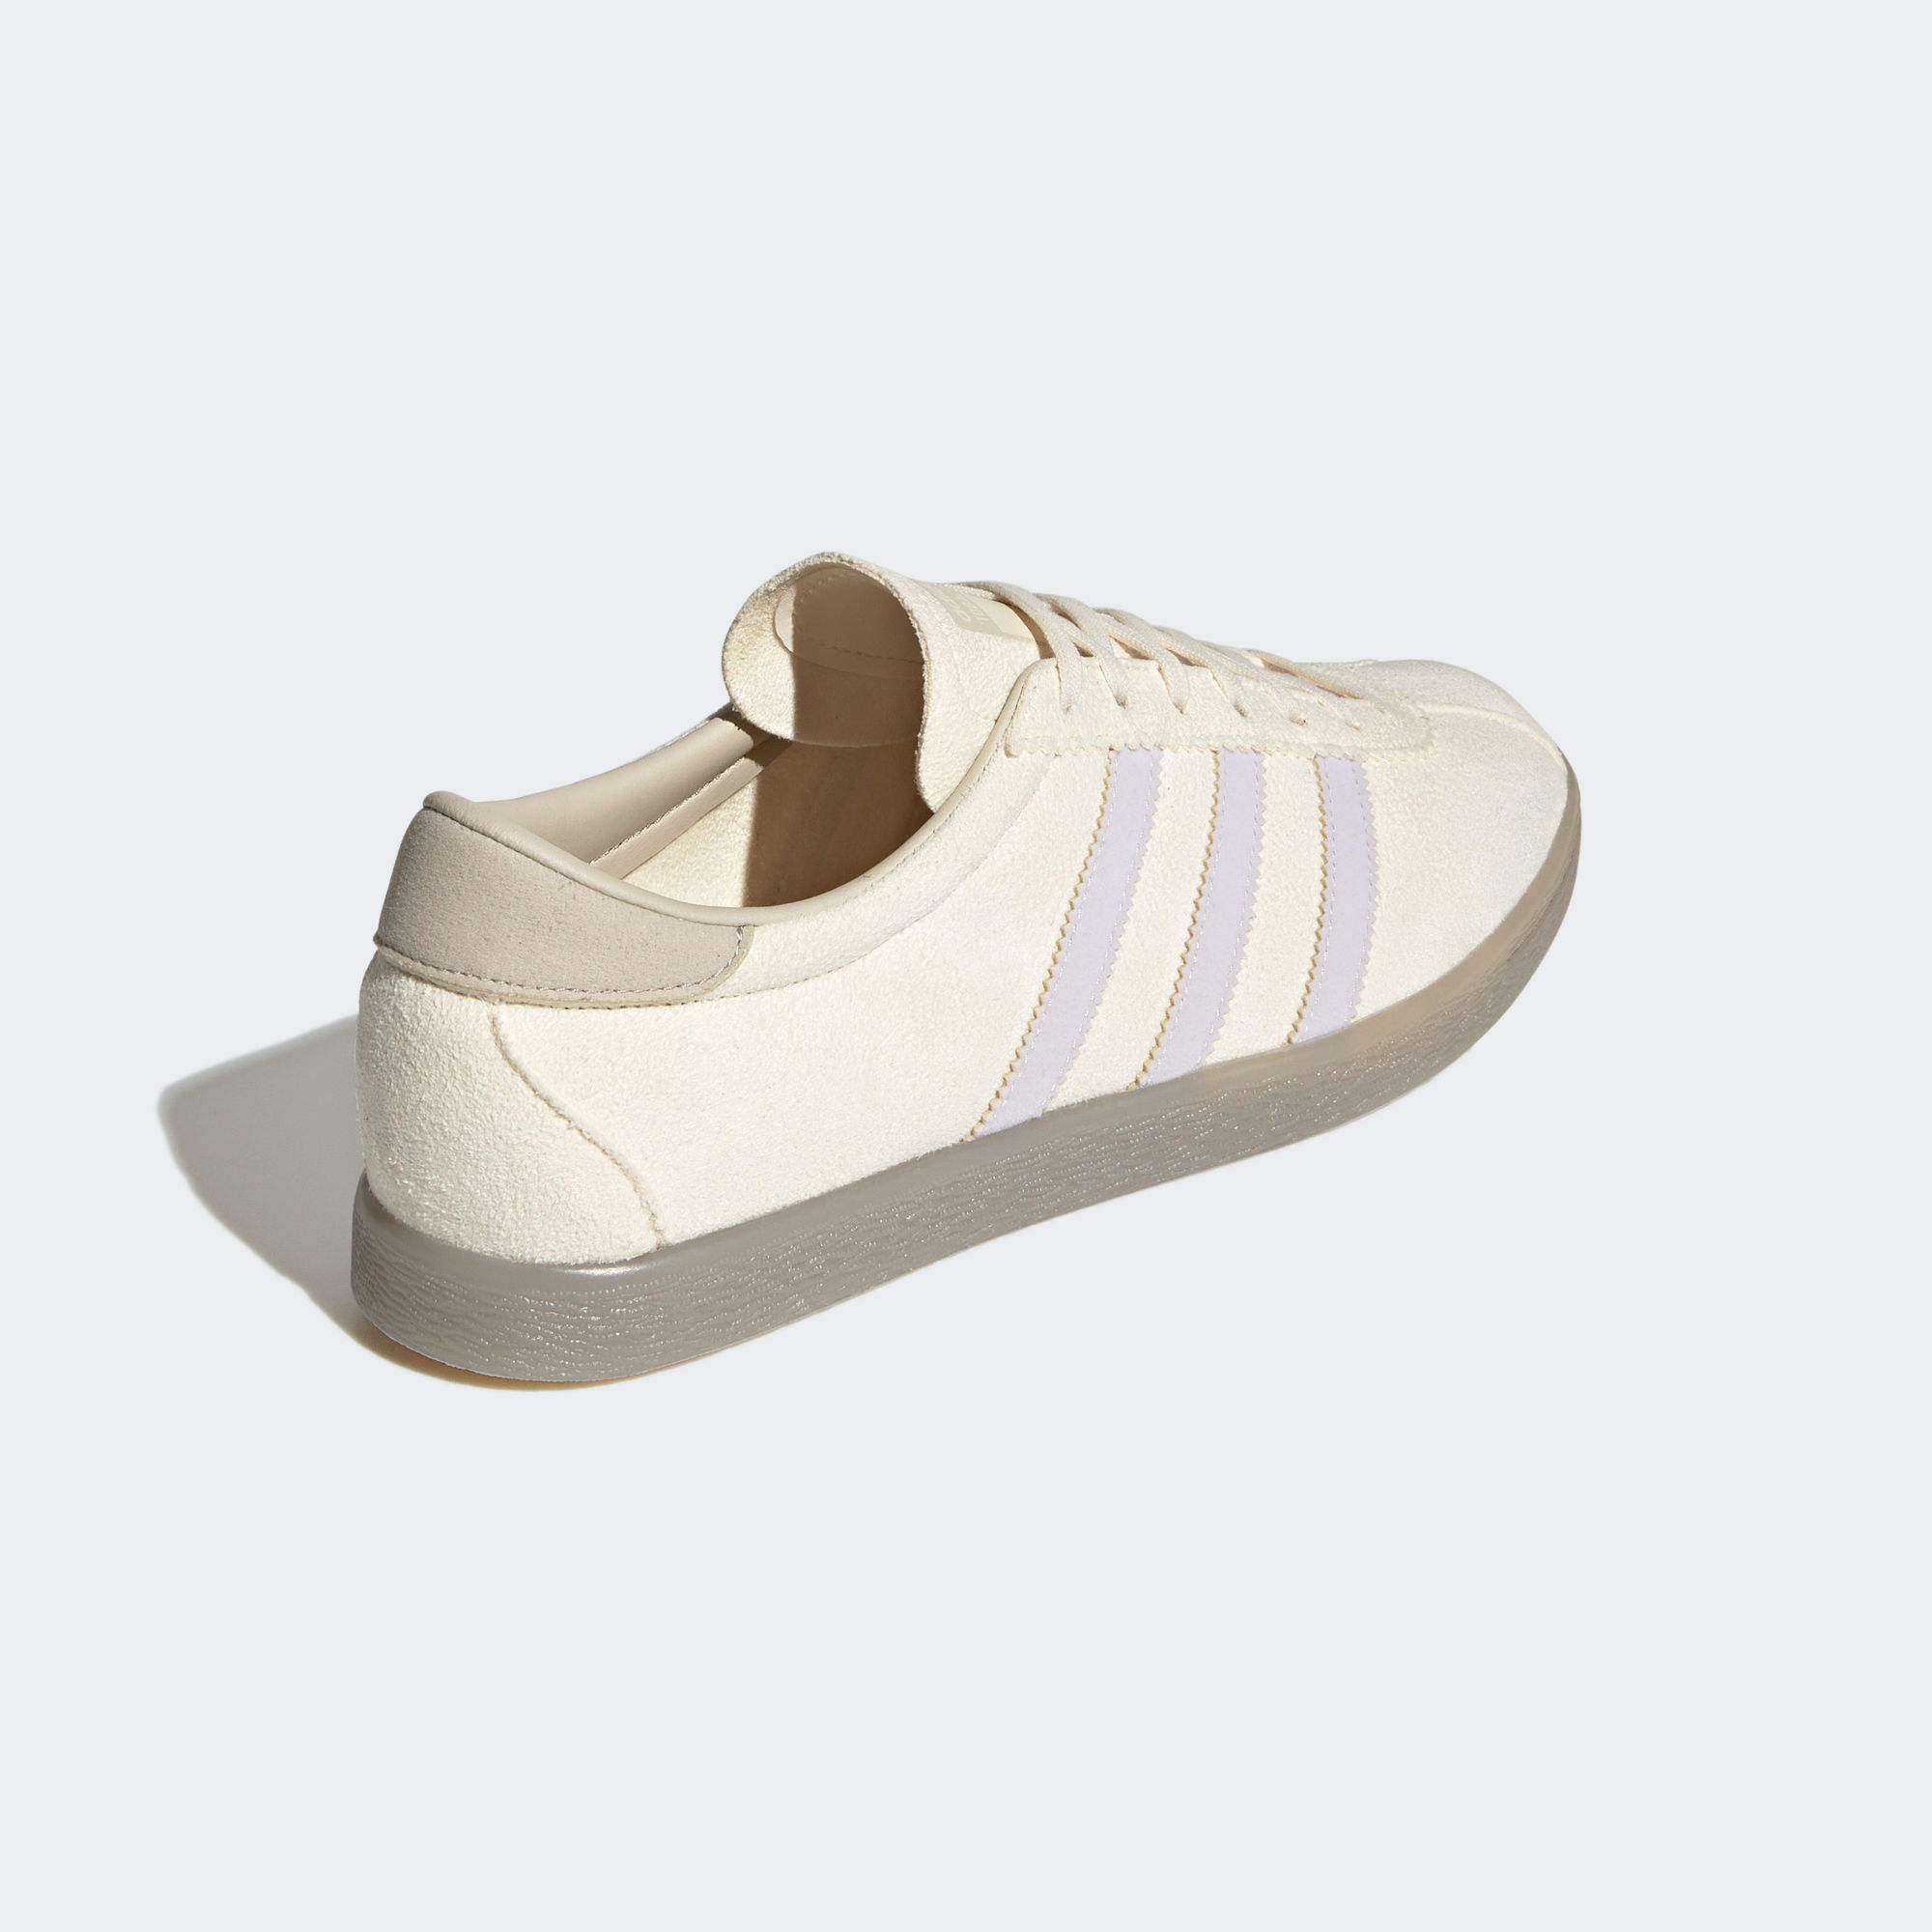 TOBACCO GRUEN 運動鞋- 白色| 女子,男子| adidas(愛迪達)香港官方網上商店